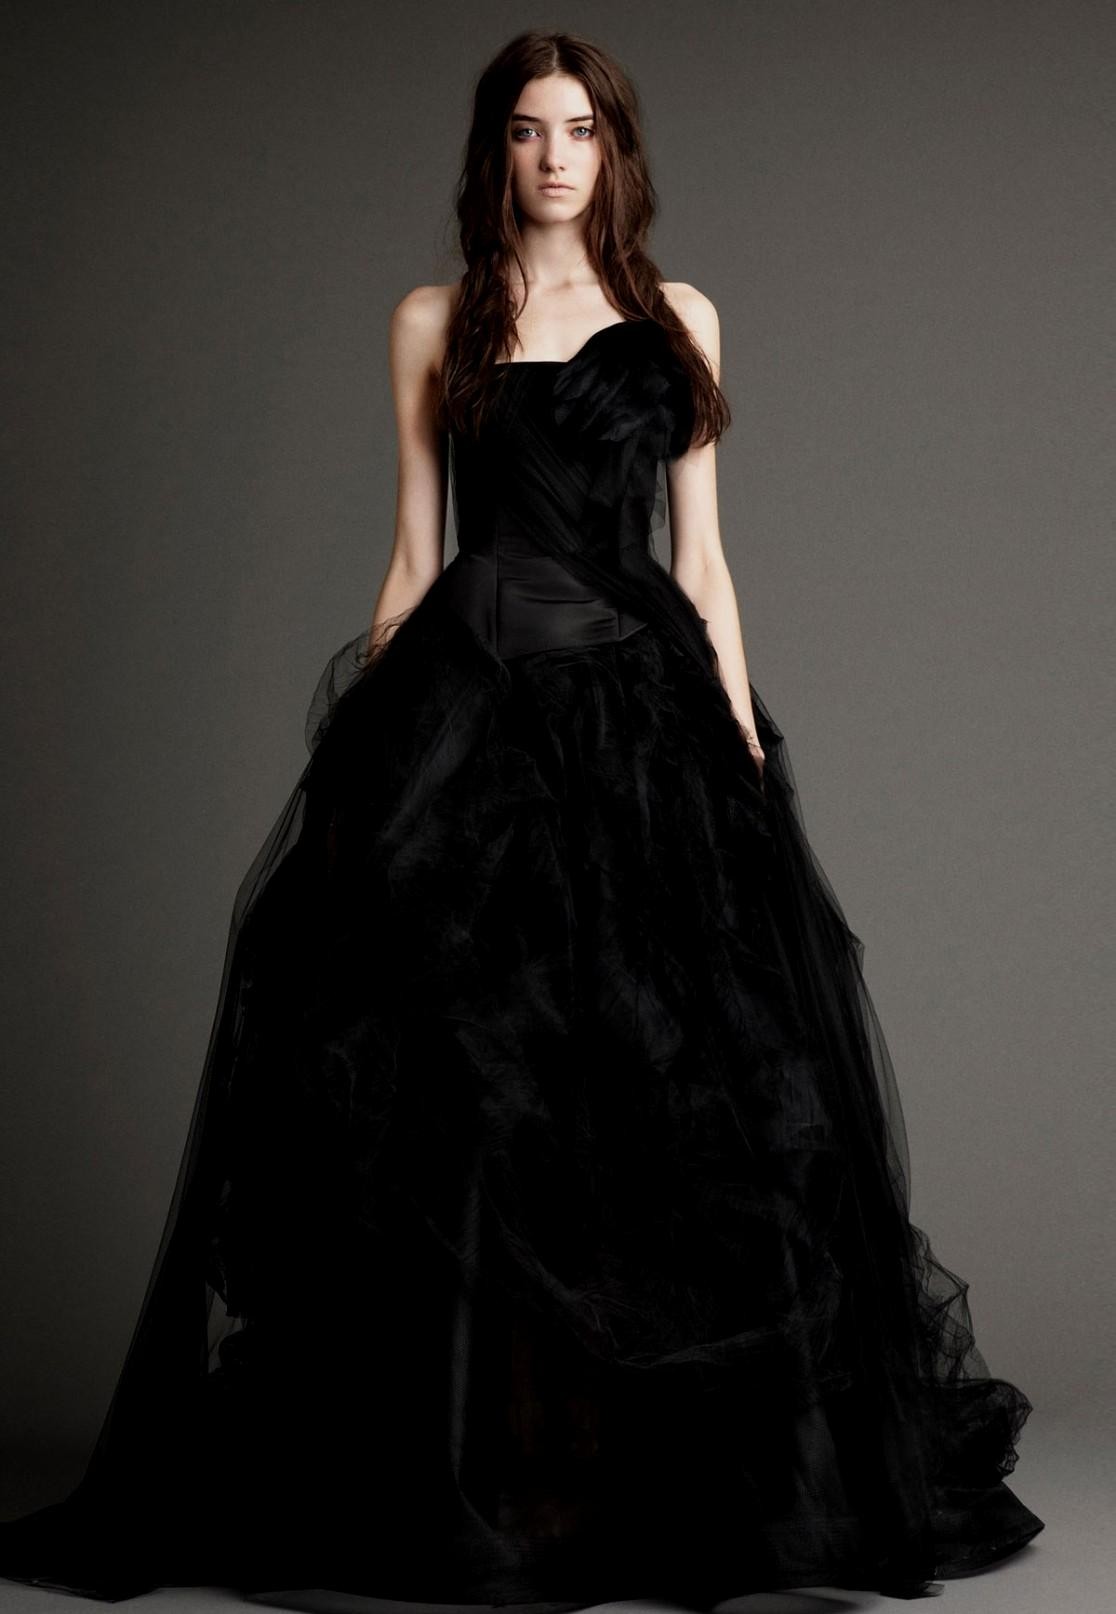 A black wedding dress